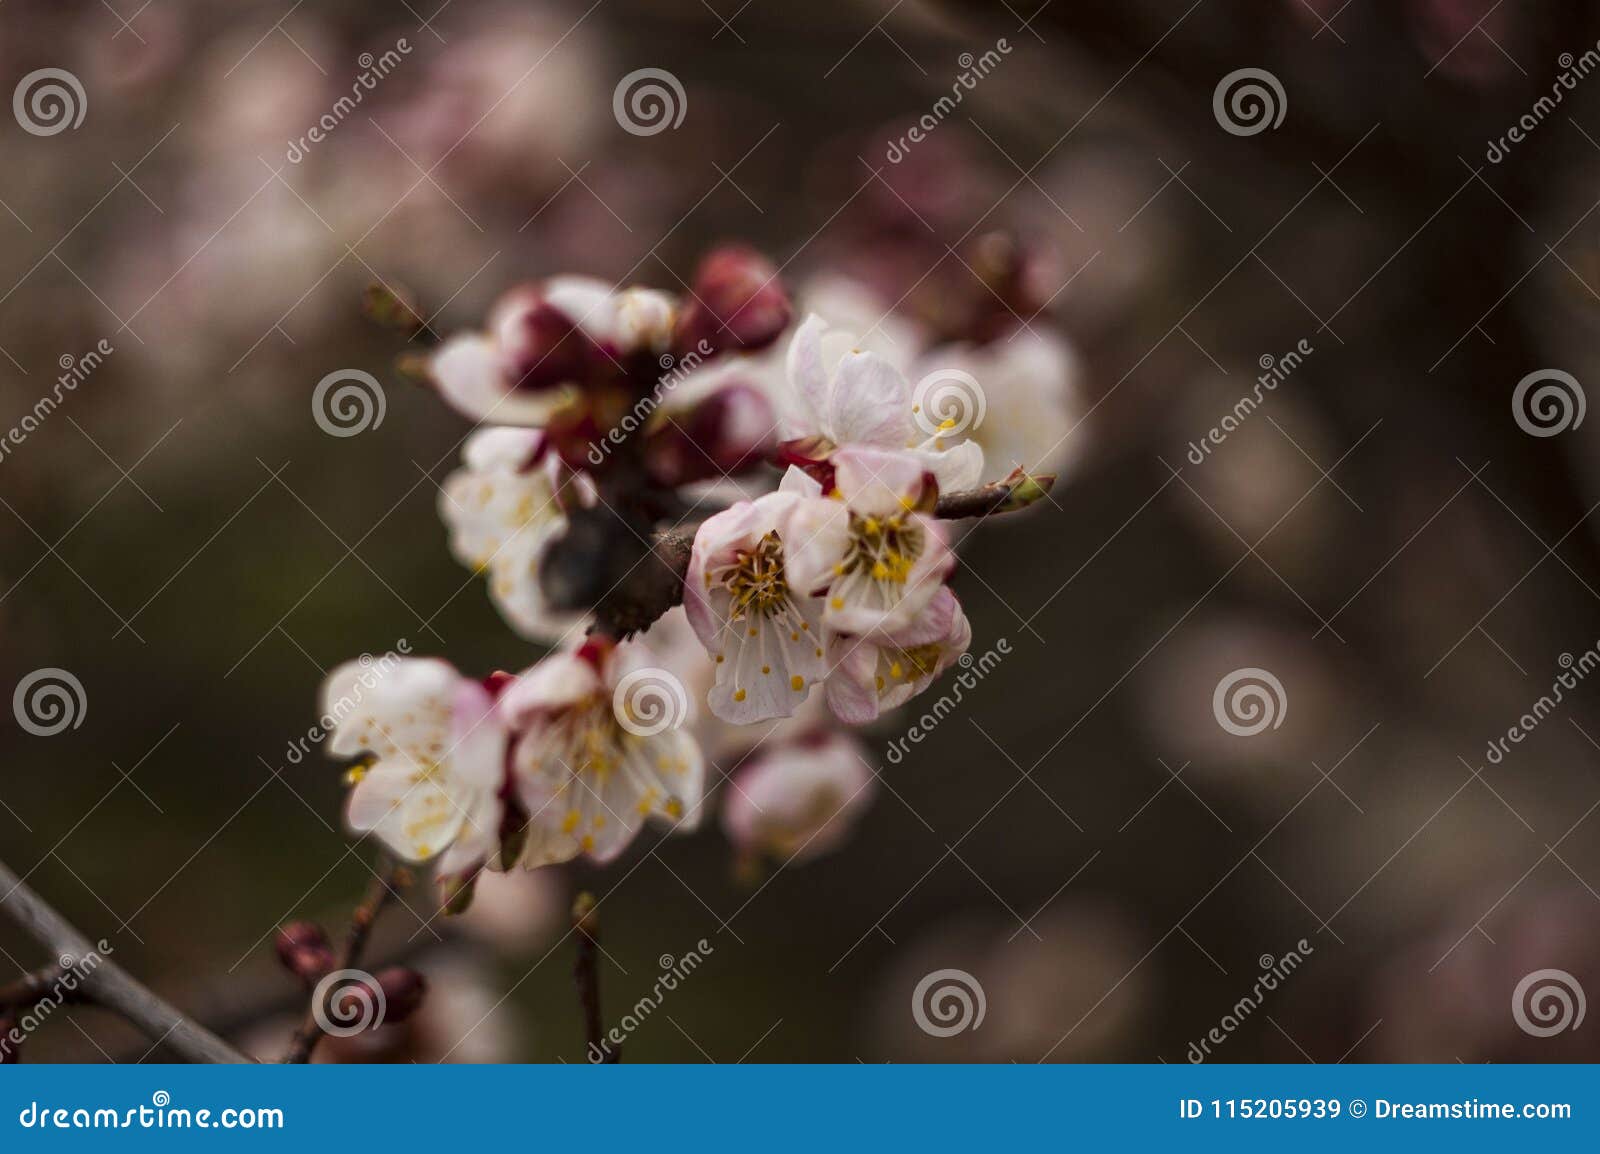 Flowers of spring stock image. Image of leaf, flower - 115205939